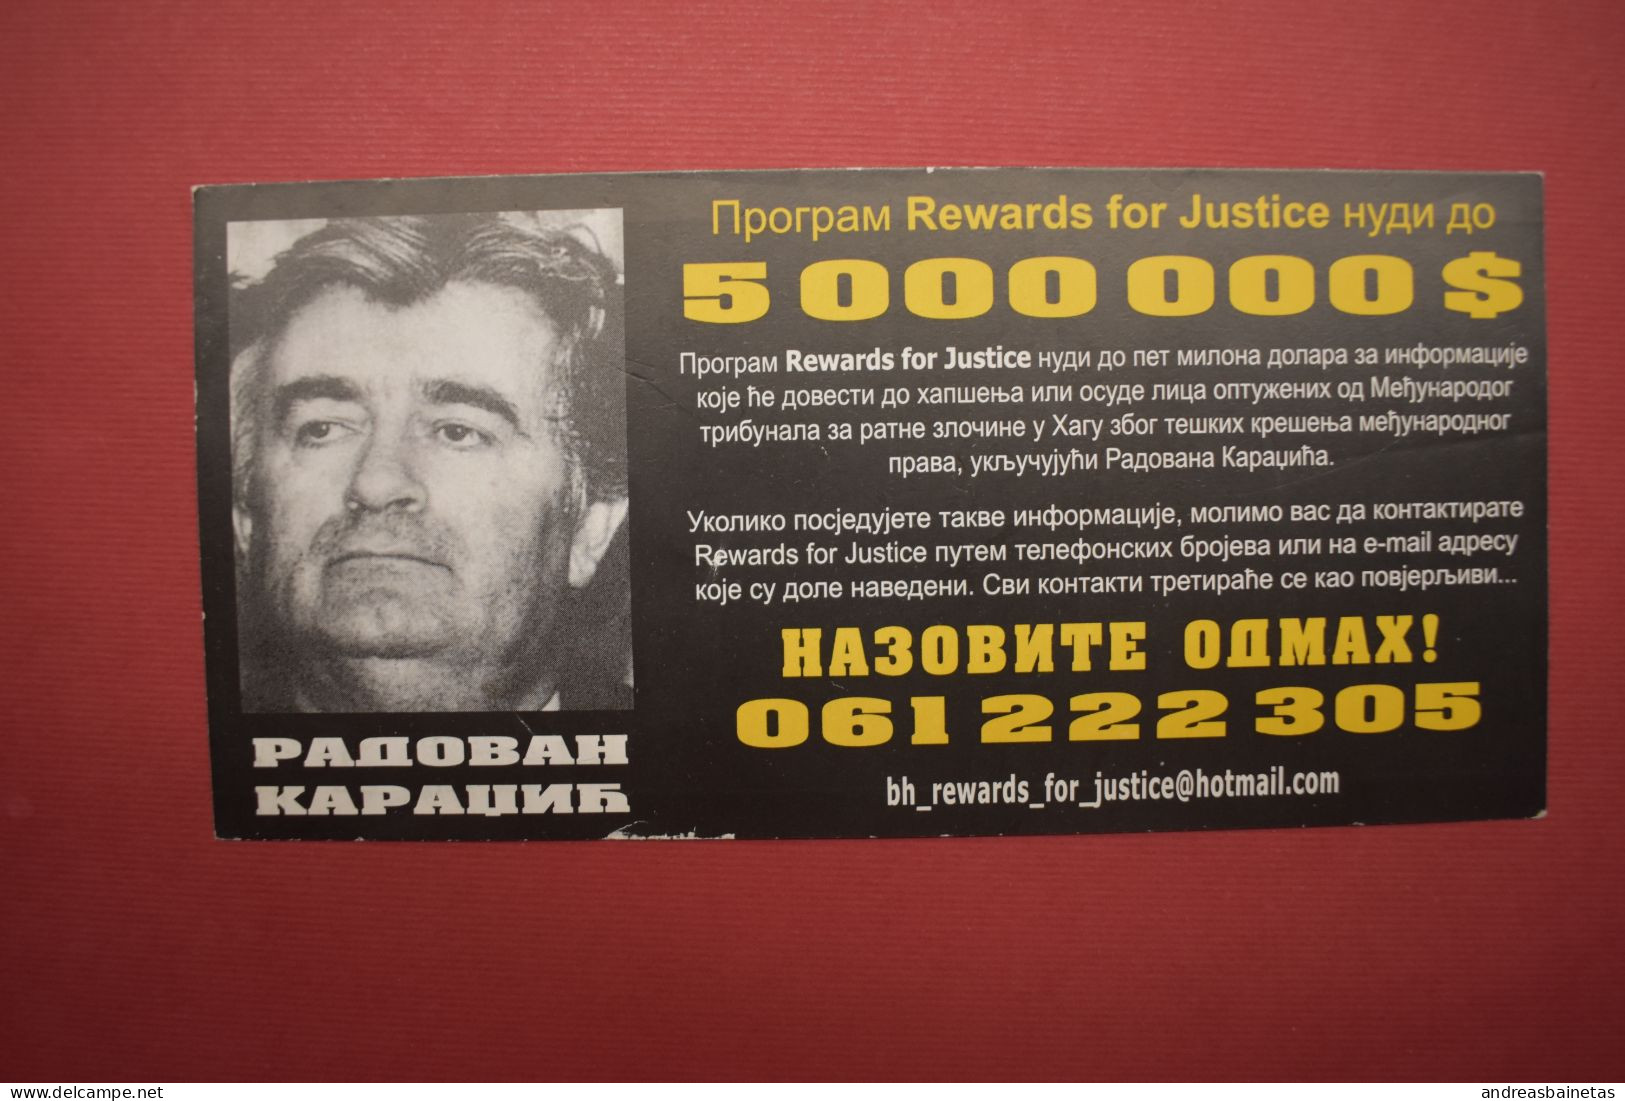 RADOVAN KARADZIC - BOSNIA WAR NATO Leaflet Flyer $5 Million Rewards For Justice - Documentos